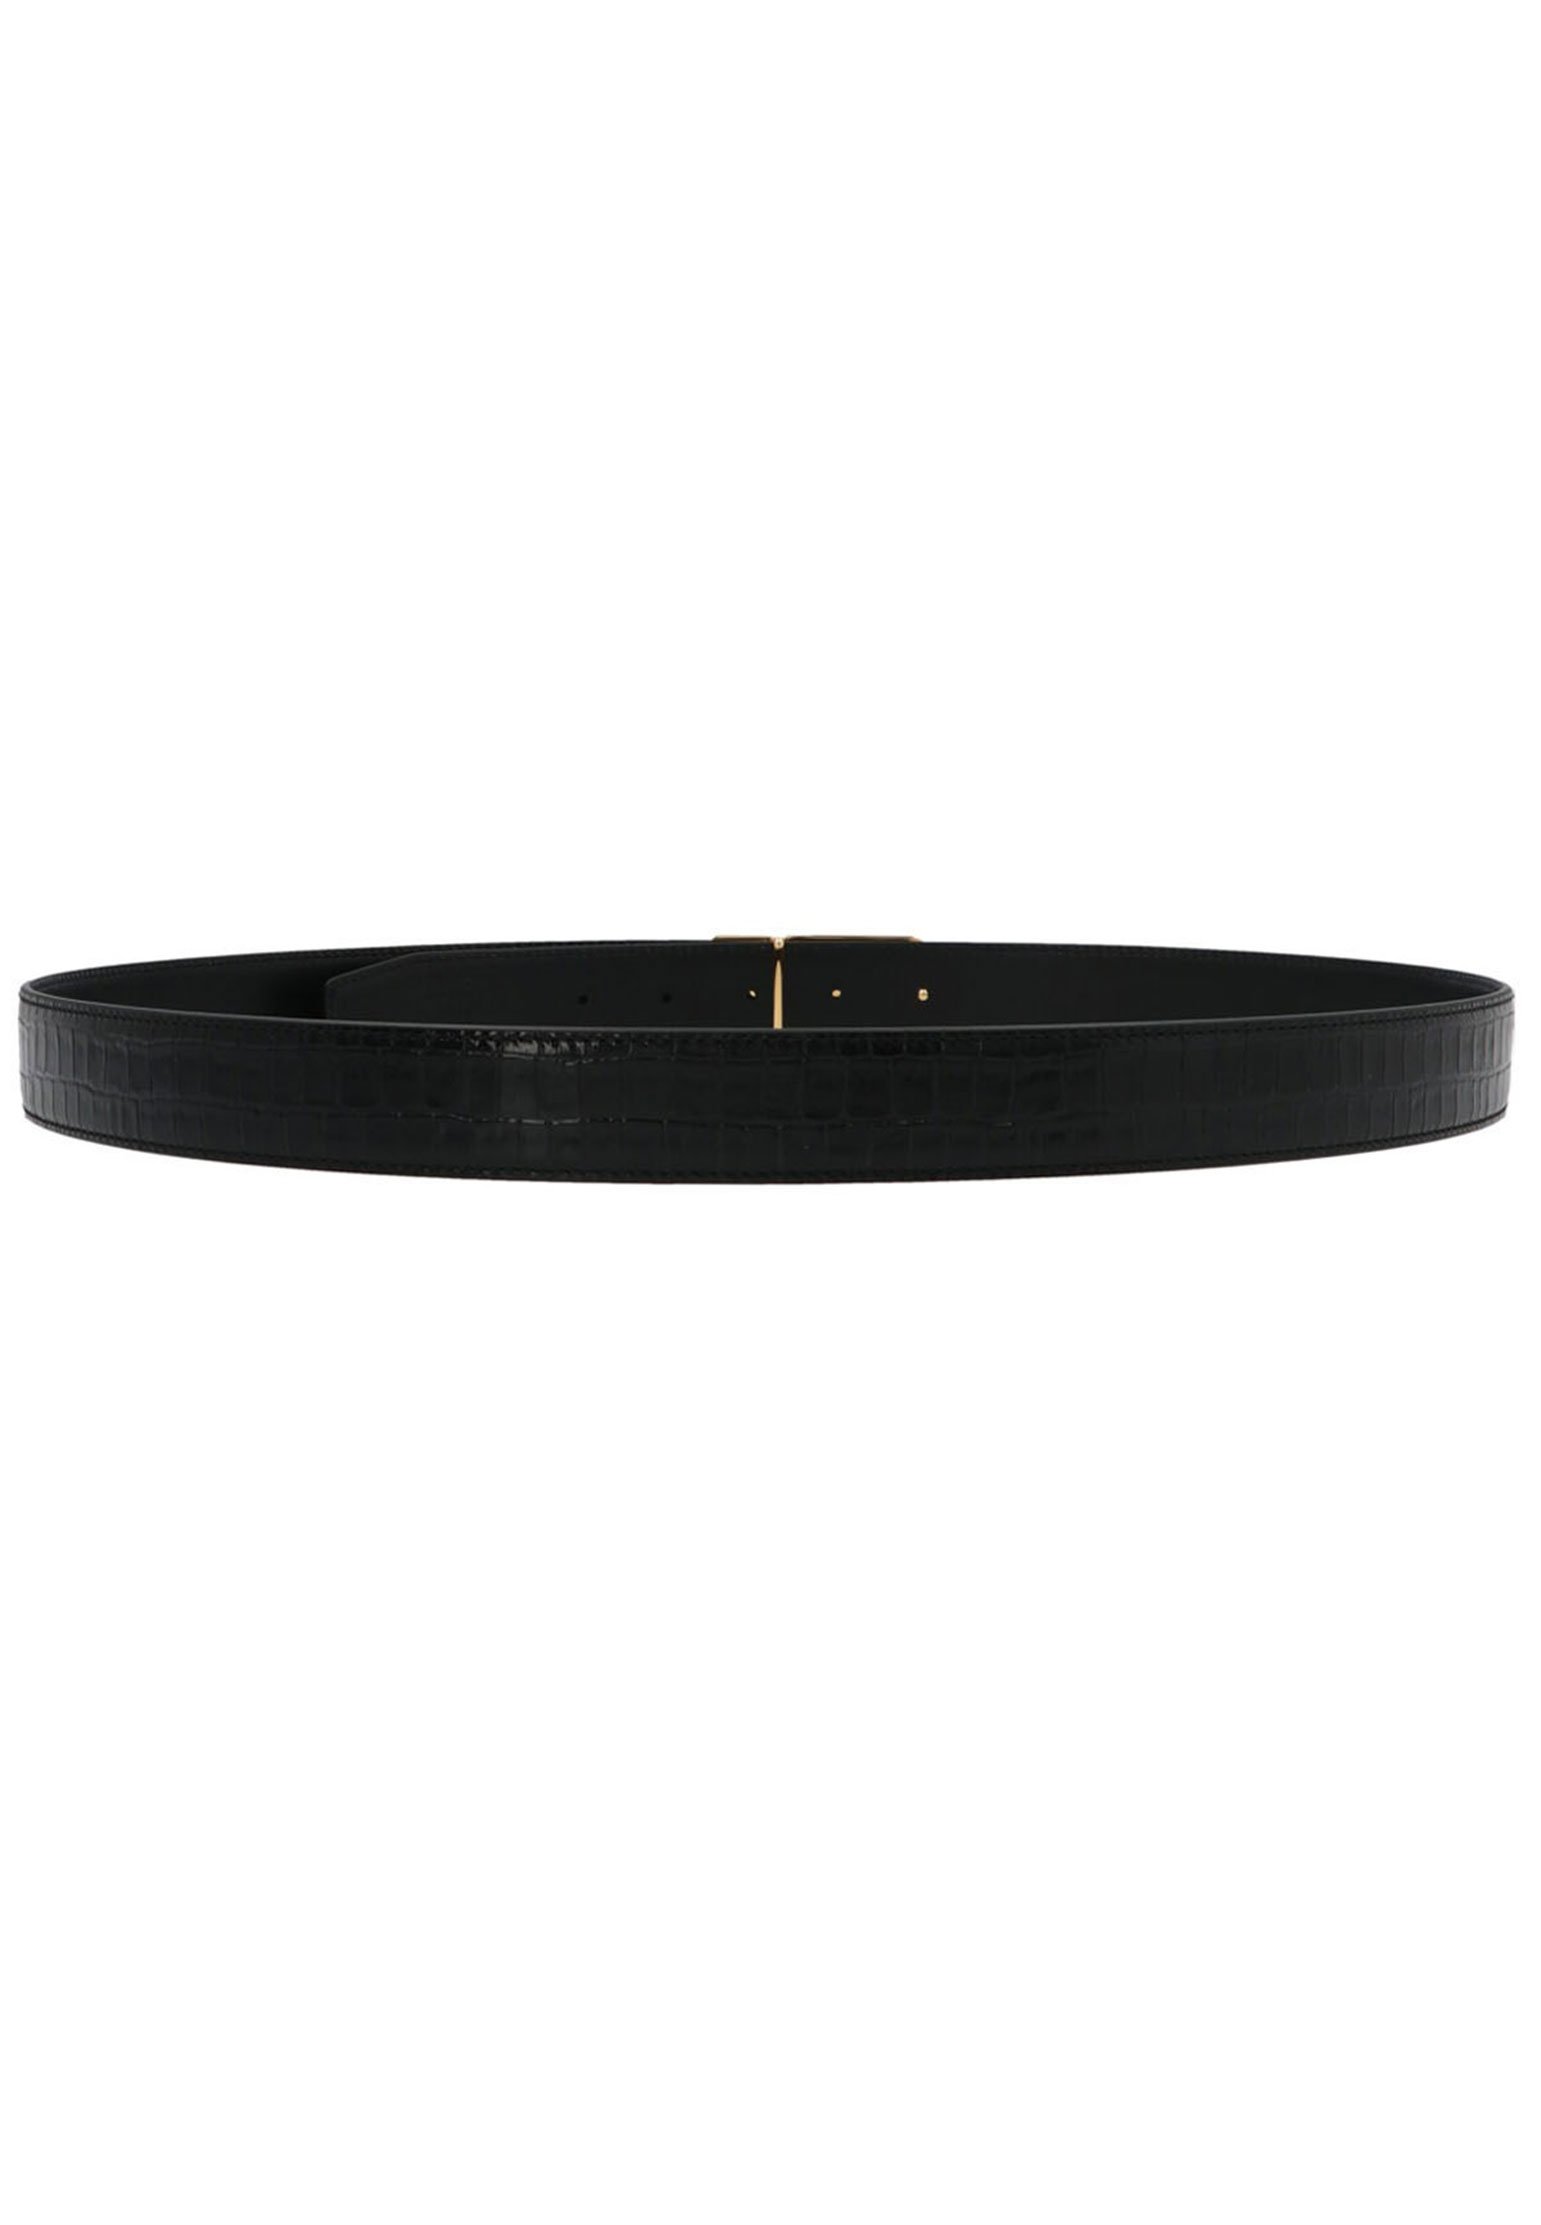 Leather belt TOM FORD Color: black (Code: 375) in online store Allure